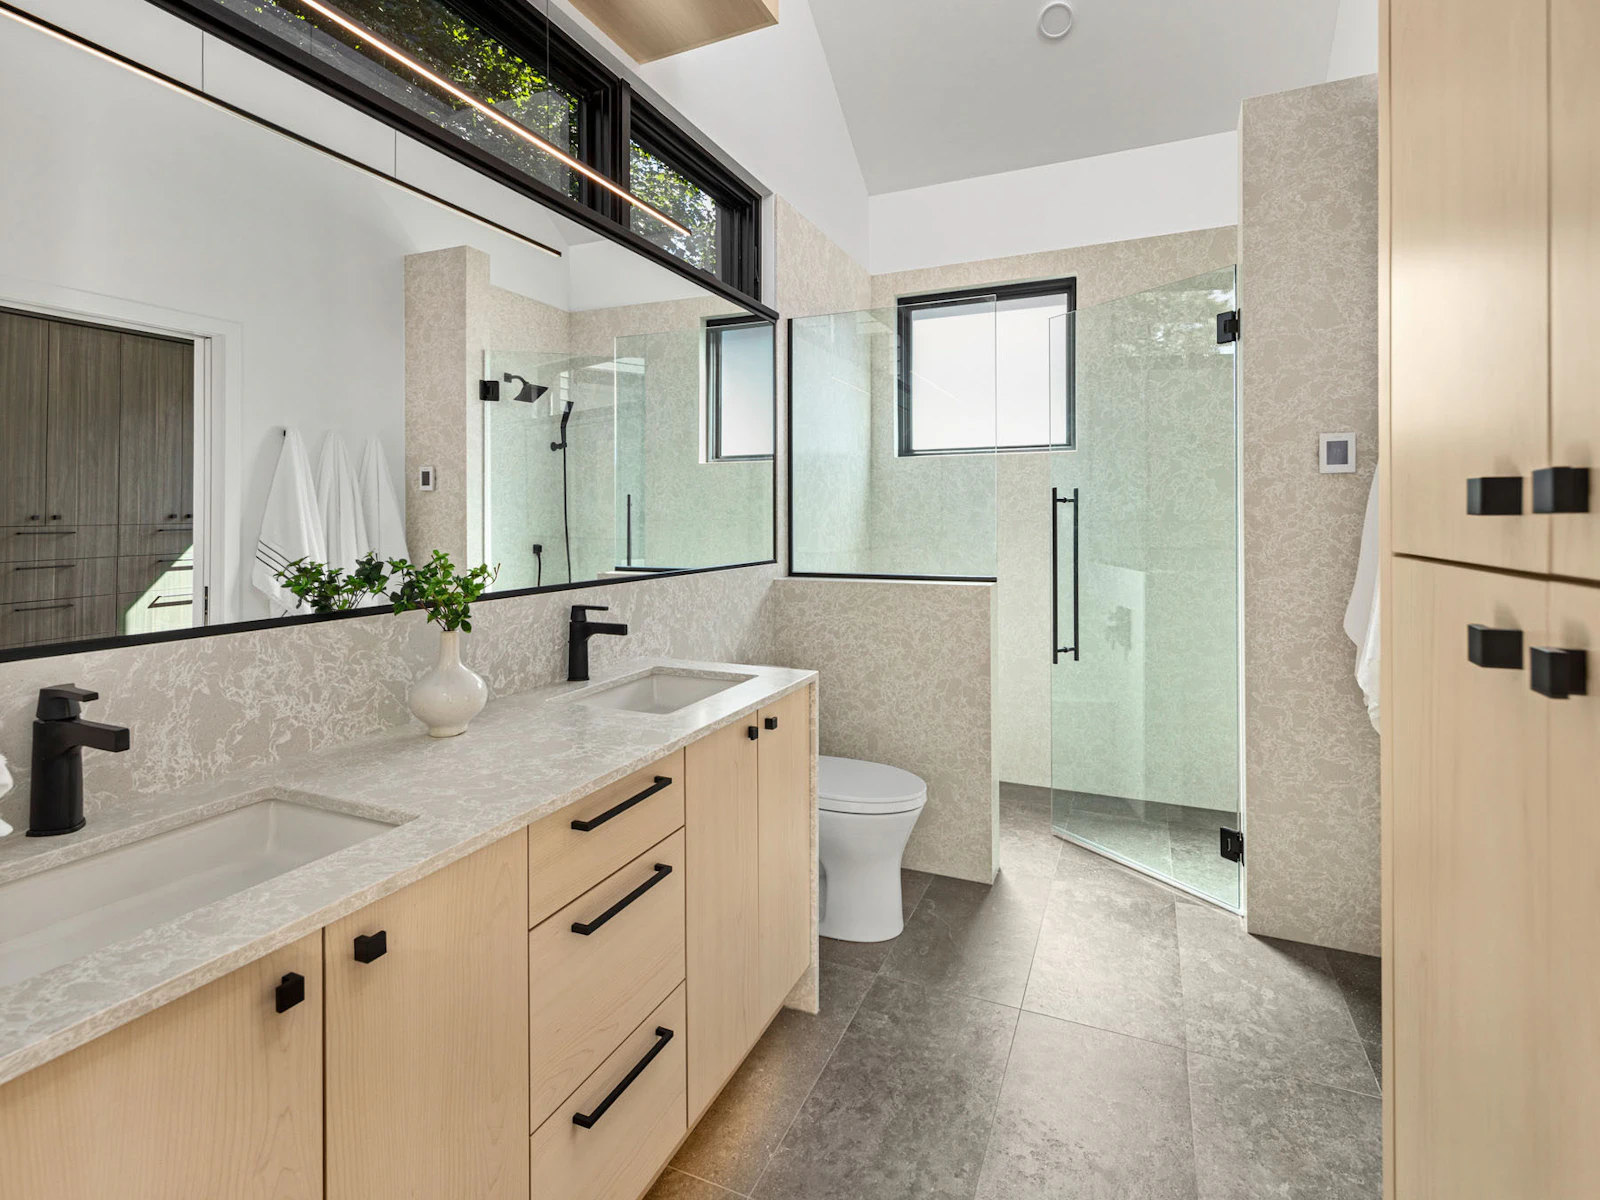 Master shower features a zero entry tile floor